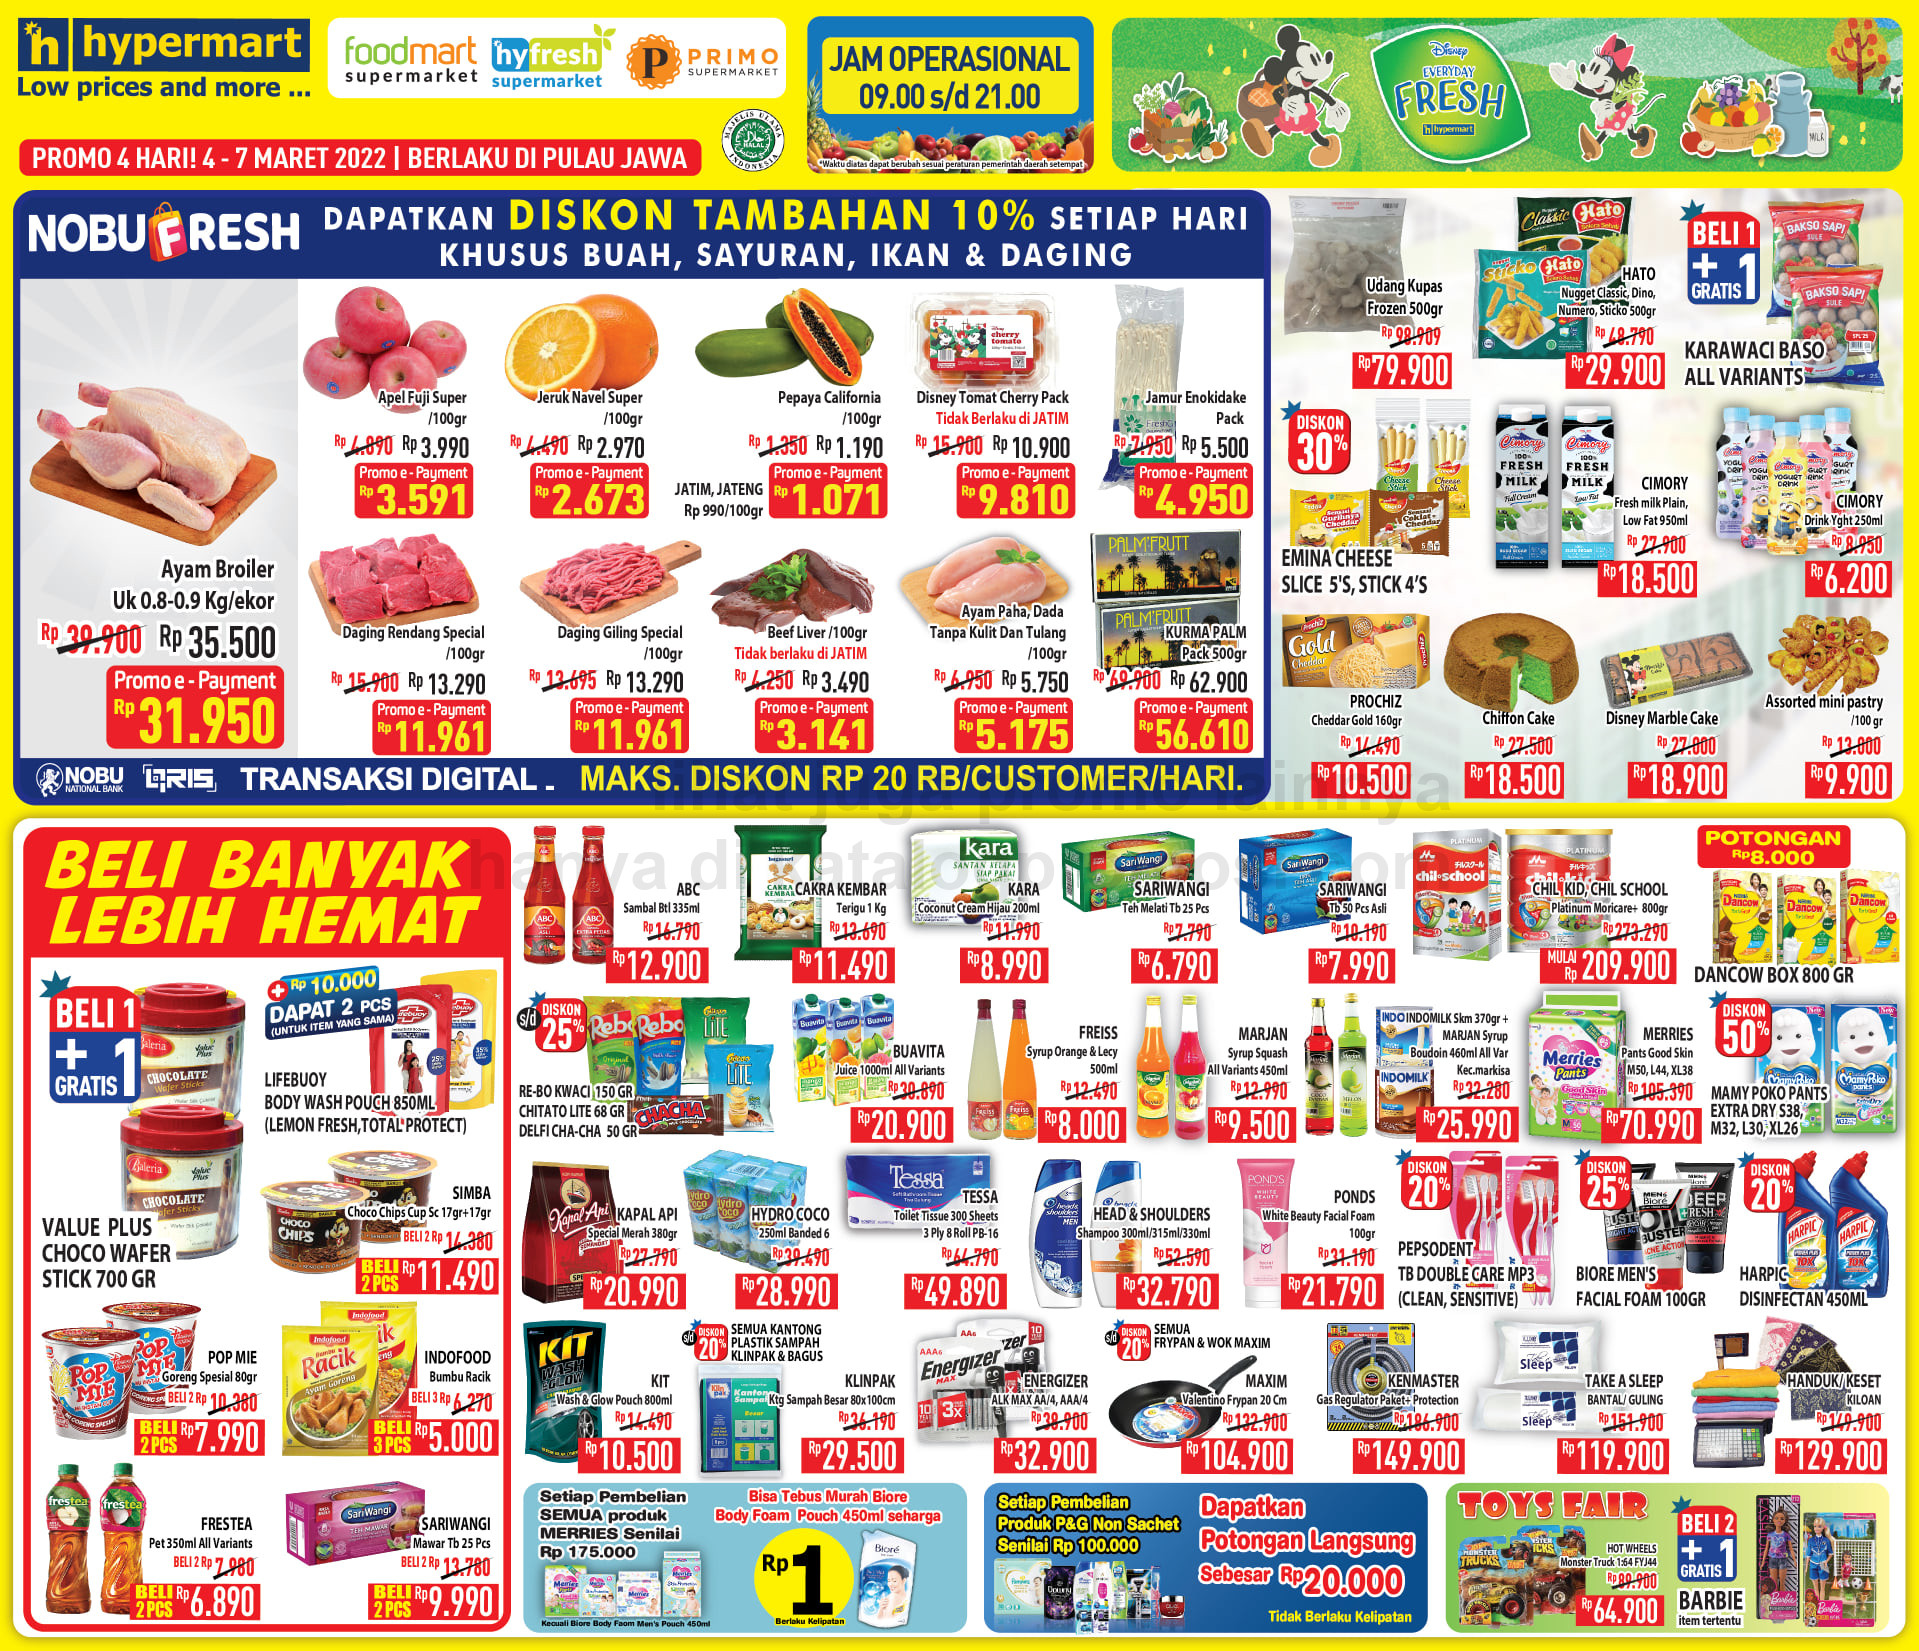 Promo Hypermart JSM Katalog Weekend periode 04-07 Maret 2022